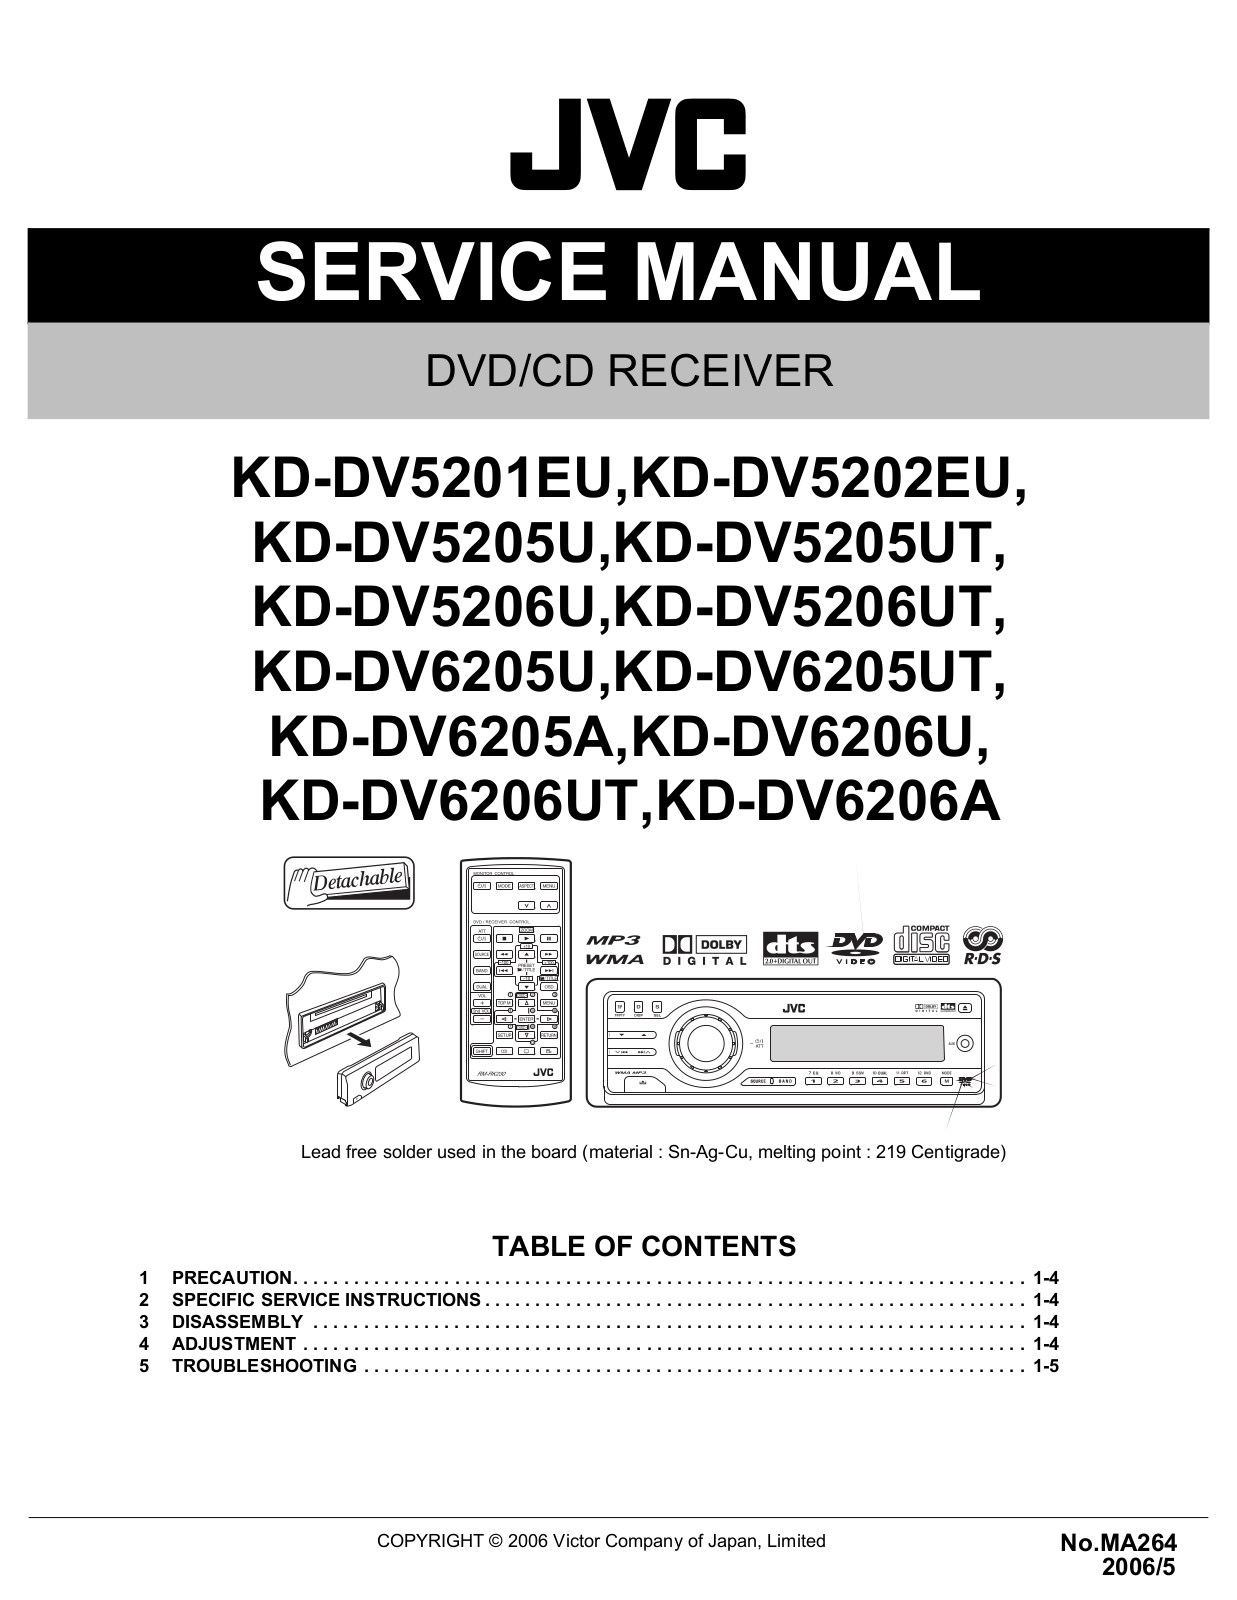 JVC KDDV-5202-EU, KDDV-5205-UT, KDDV-5205-U, KDDV-5201-EU, KDDV-5206-U Service manual